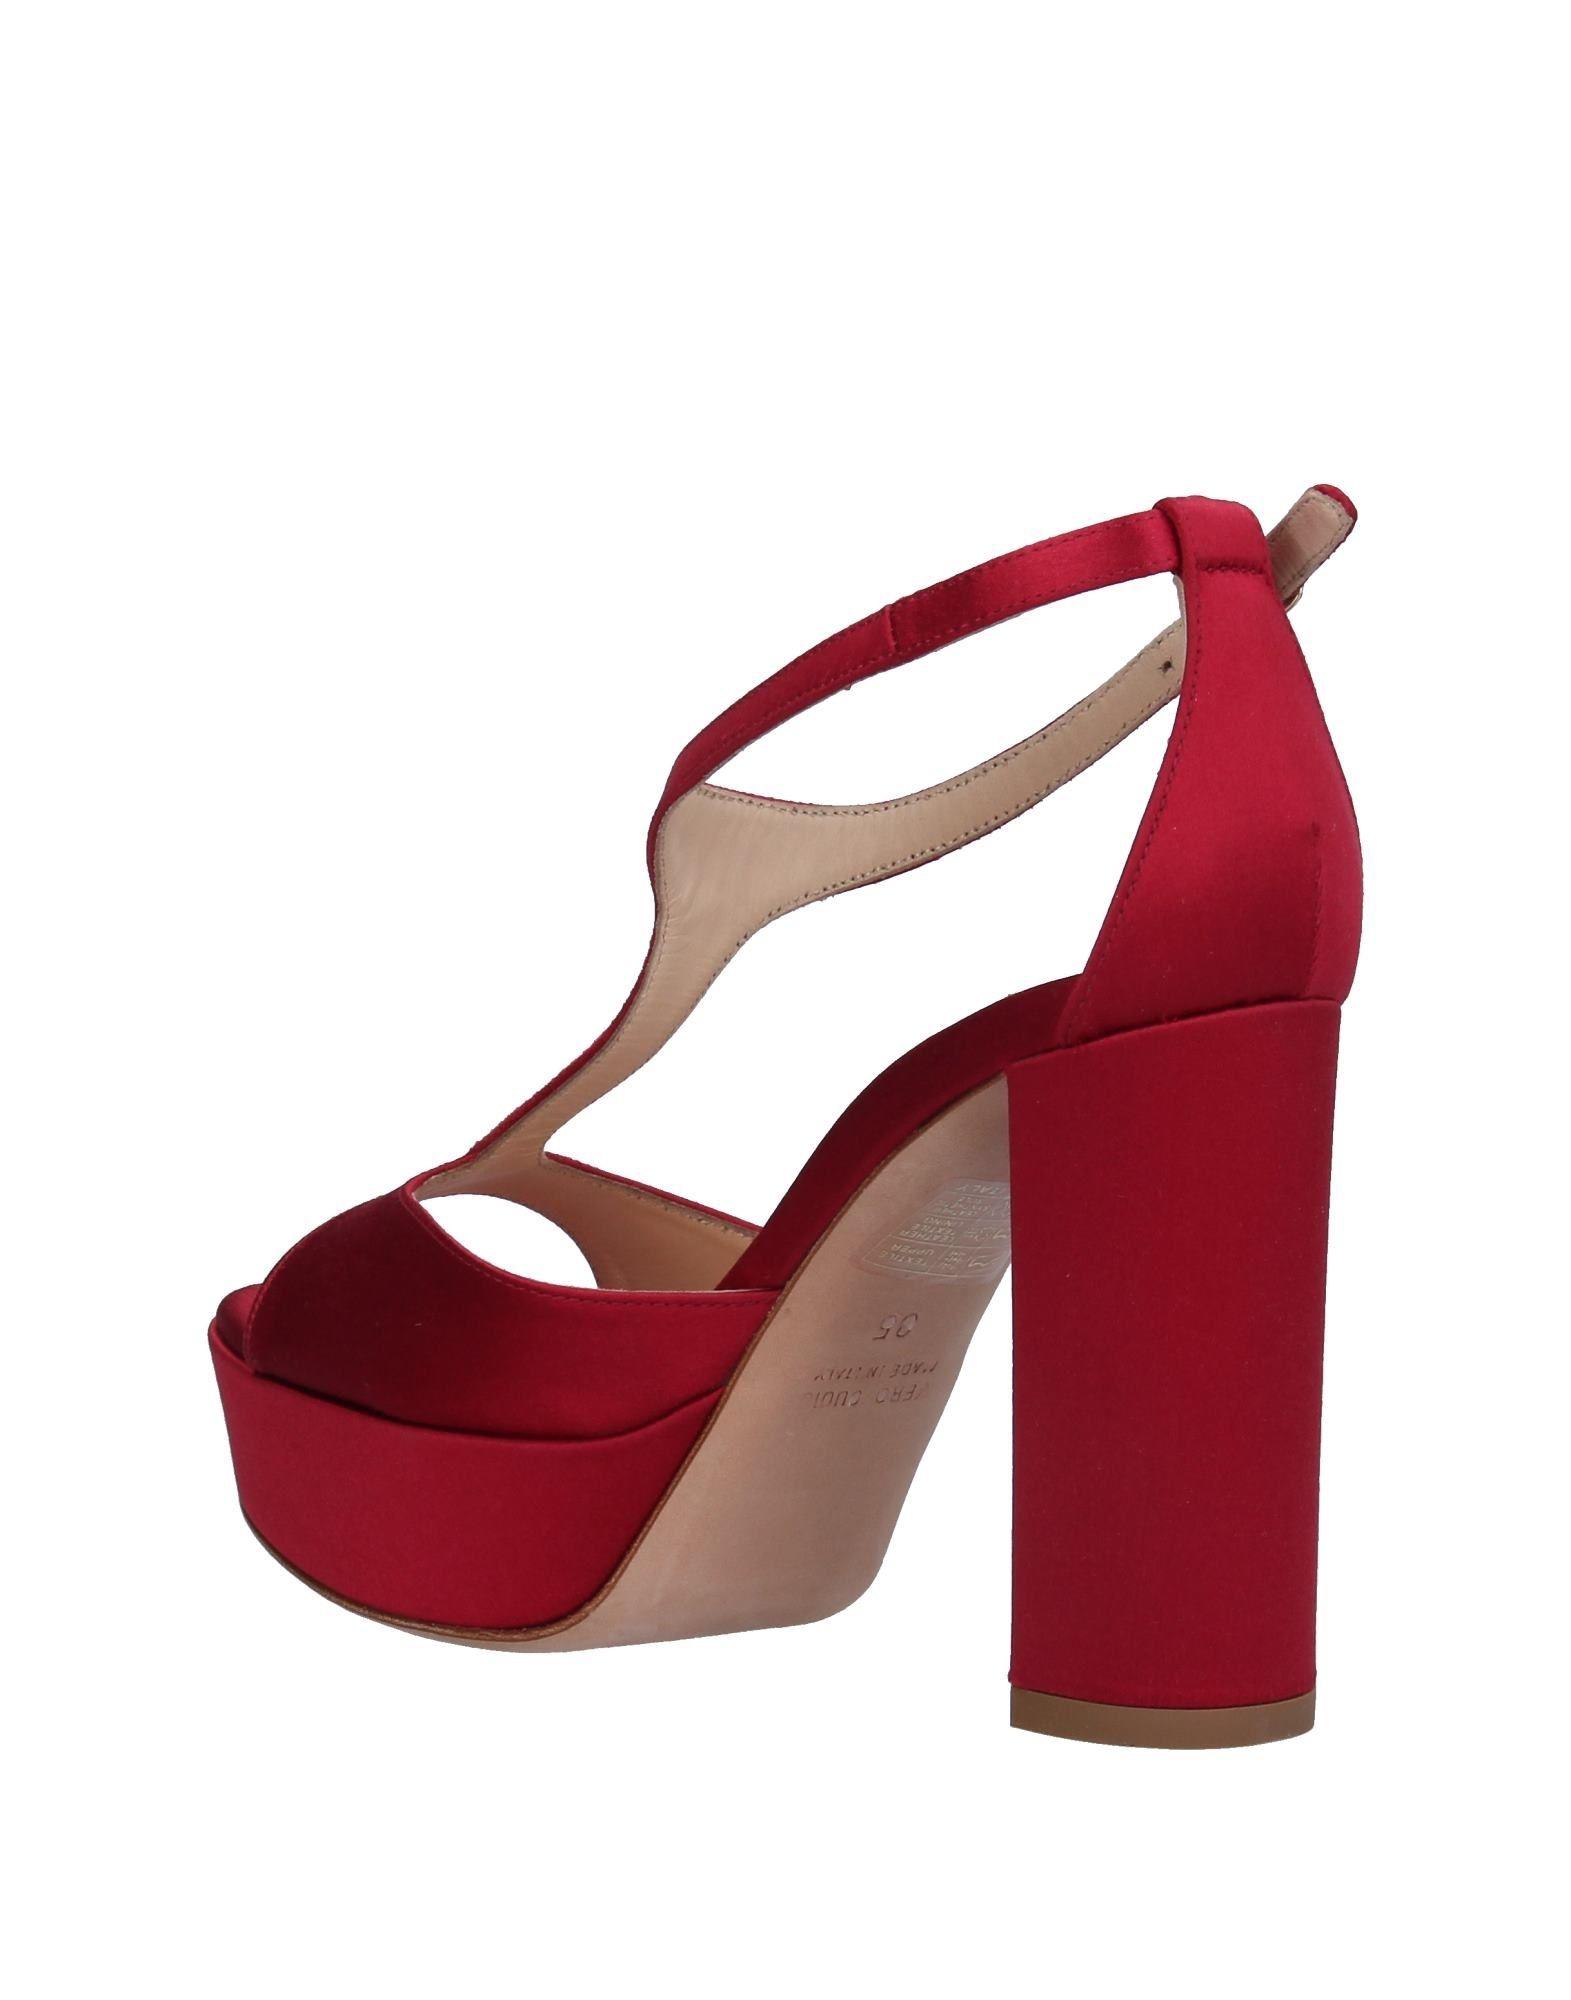 Lyst - Lella Baldi Sandals in Red